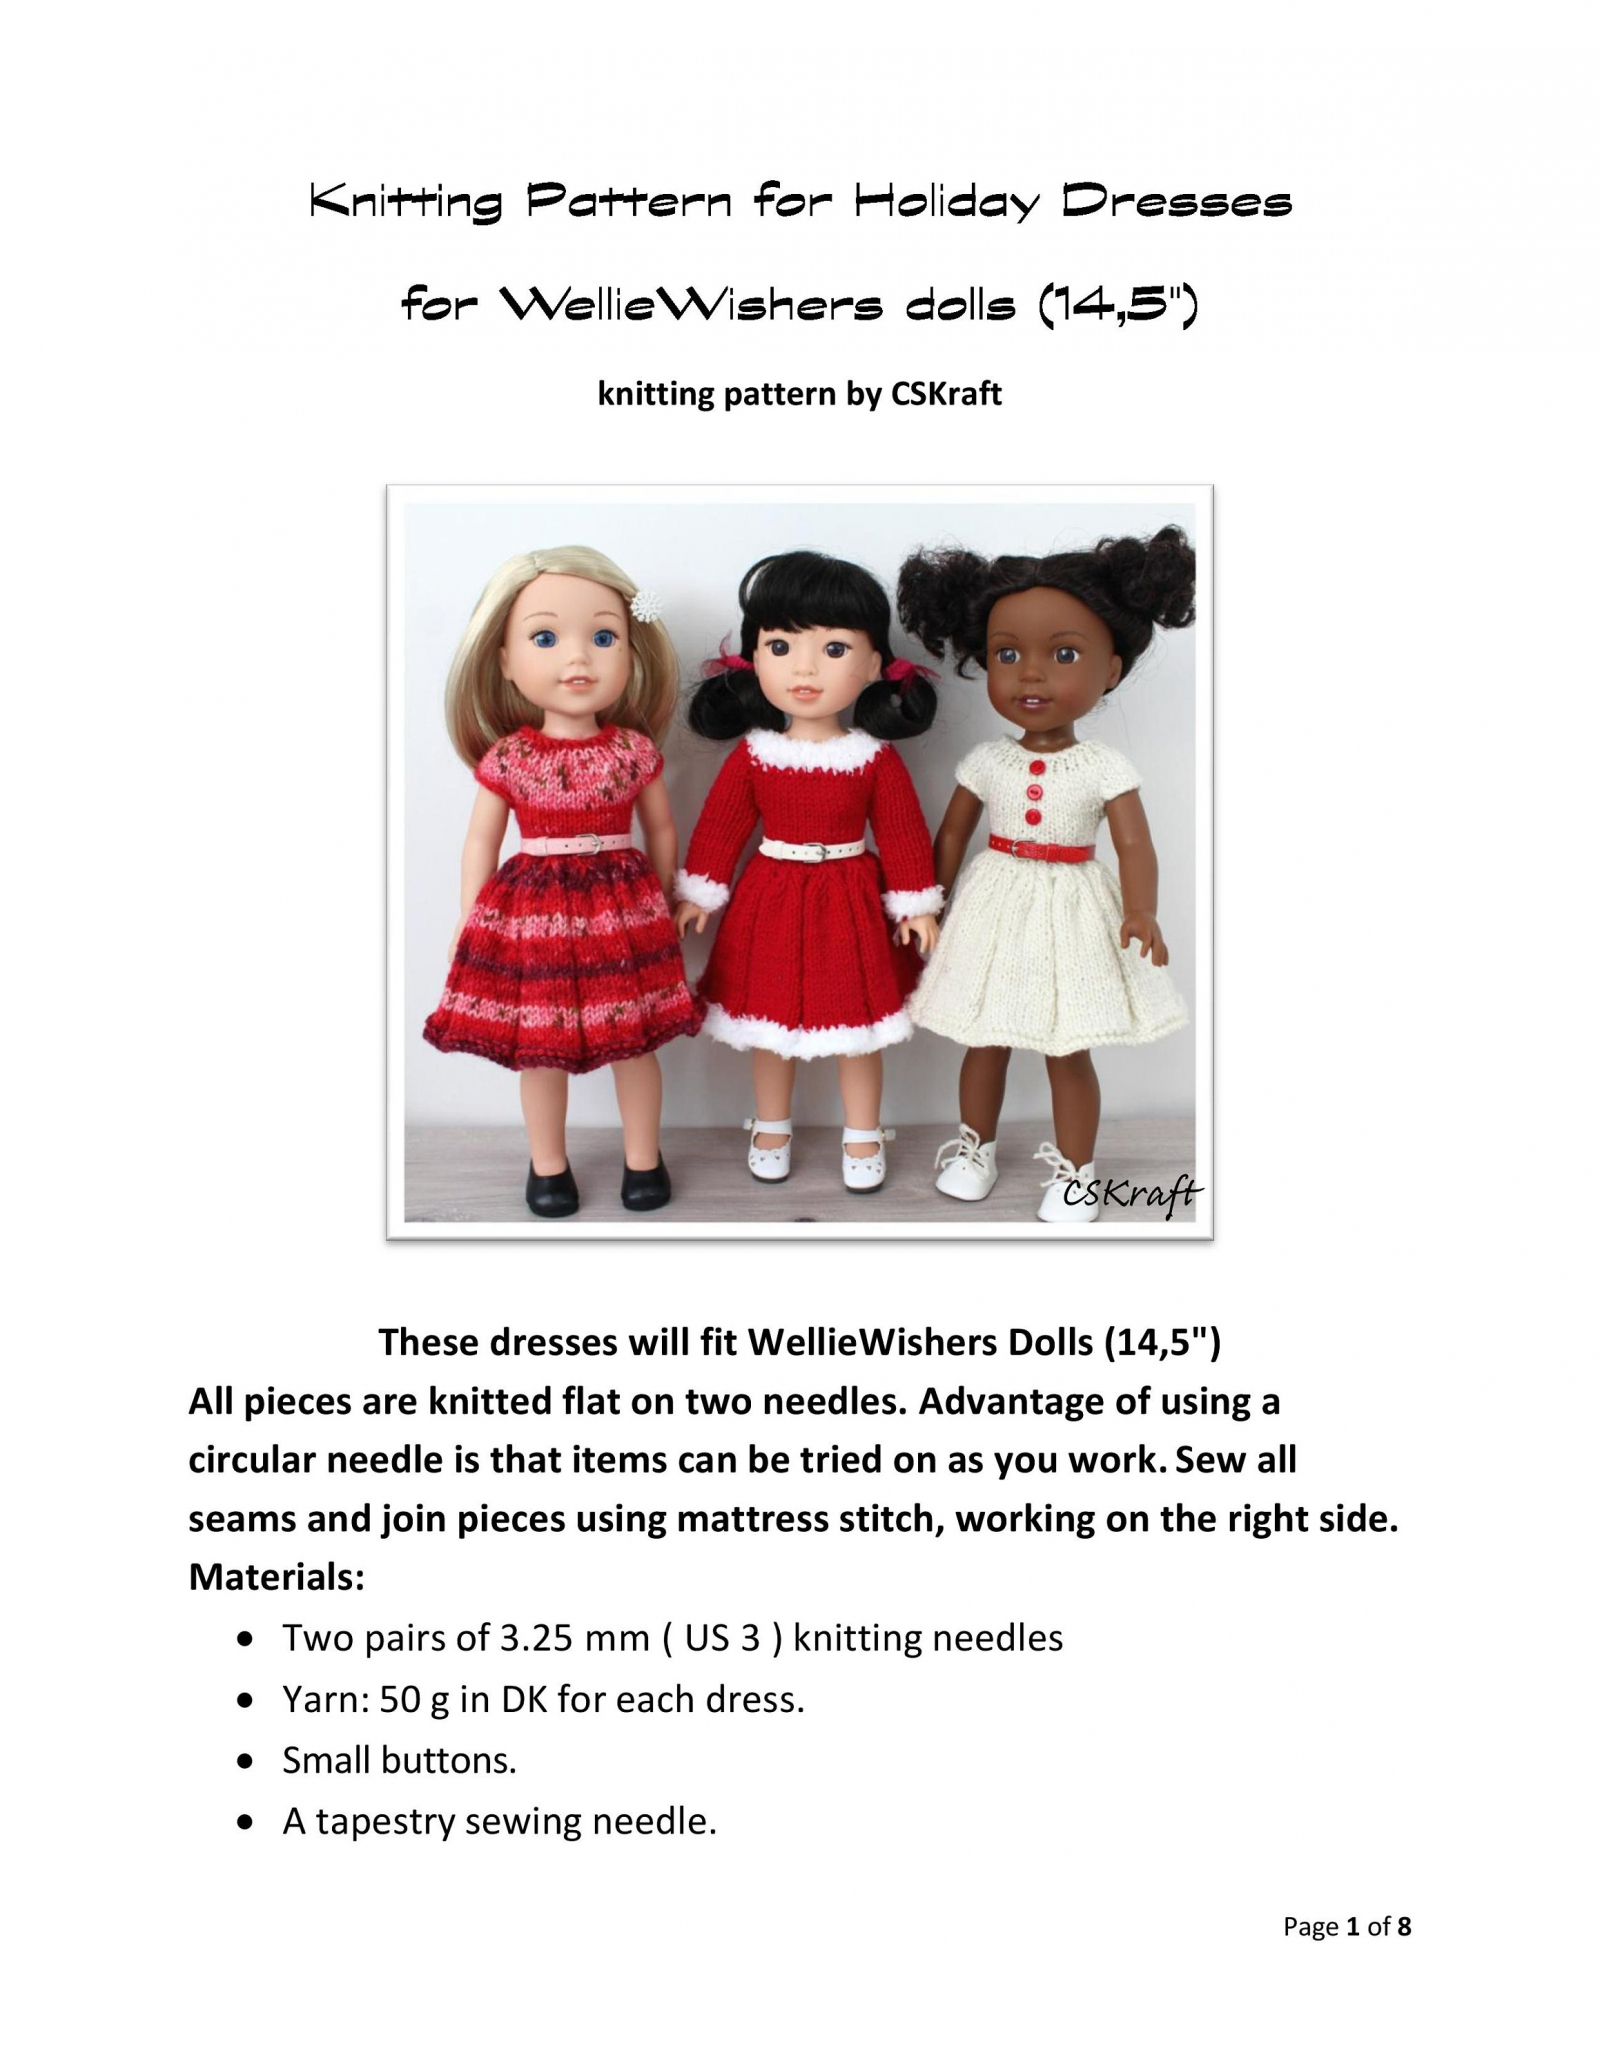 Knitting pattern for Wellie Wishers doll | CSKraft4dolls